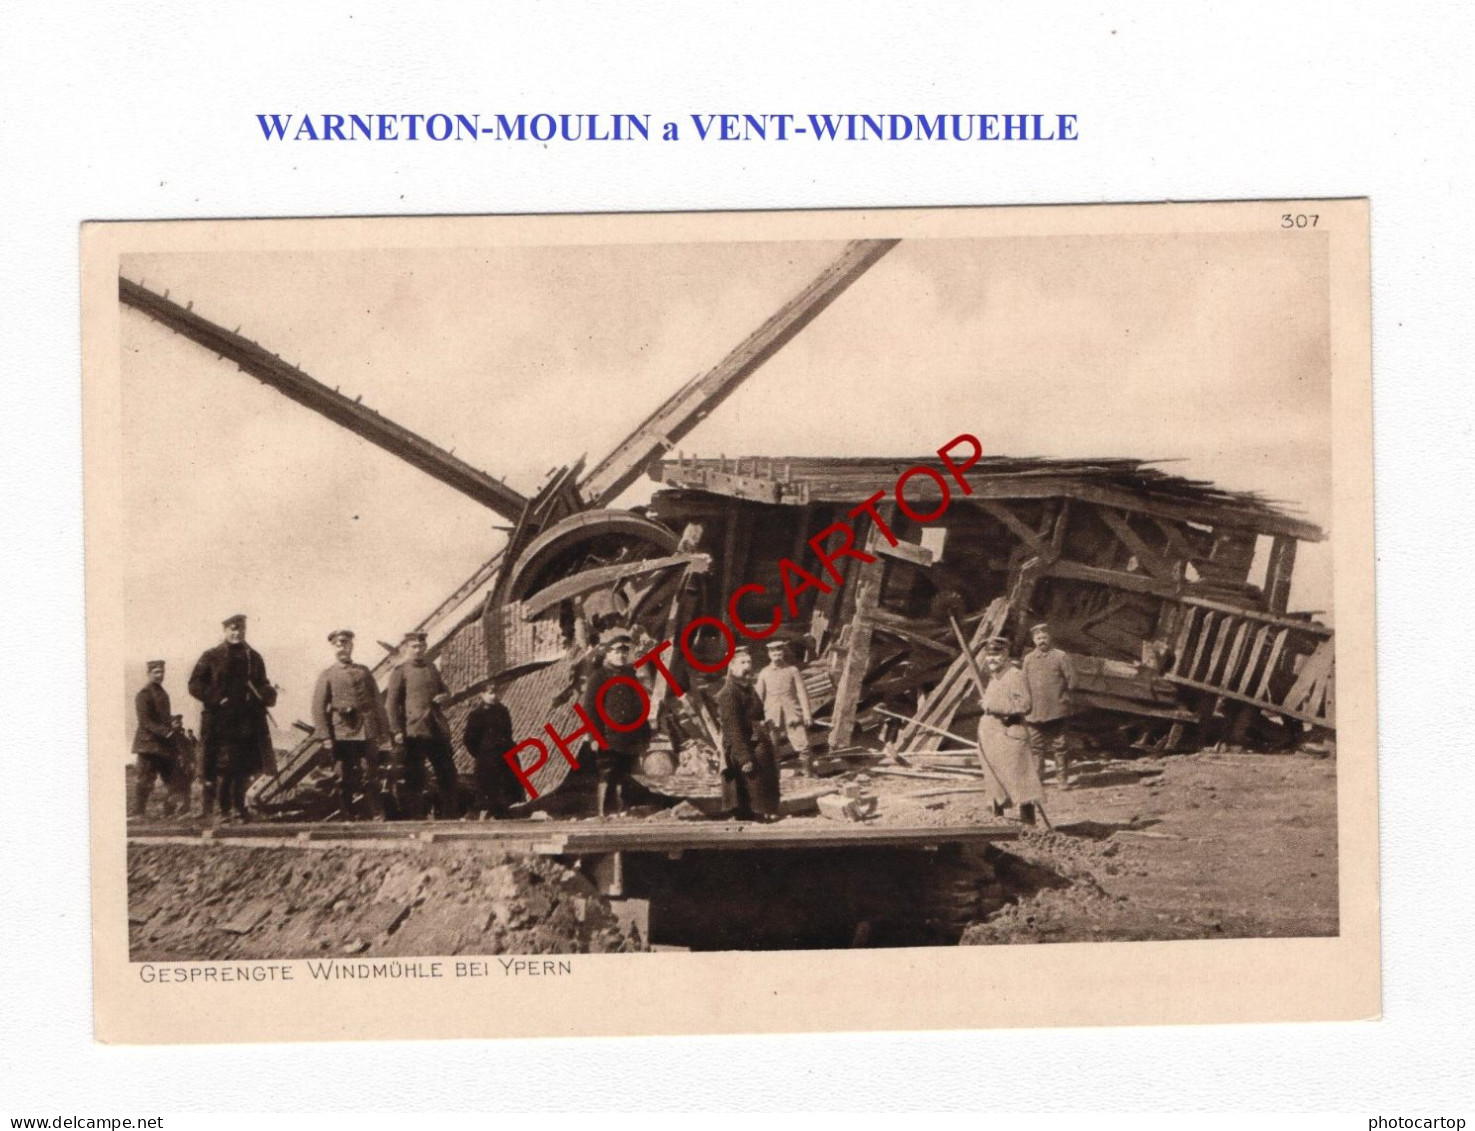 WARNETON-MOULIN A VENT-WINDMUEHLE-CARTE Imprimee Allemande-Guerre-14-18-1 WK-BELGIQUE-BELGIEN-Flandern- - Komen-Waasten